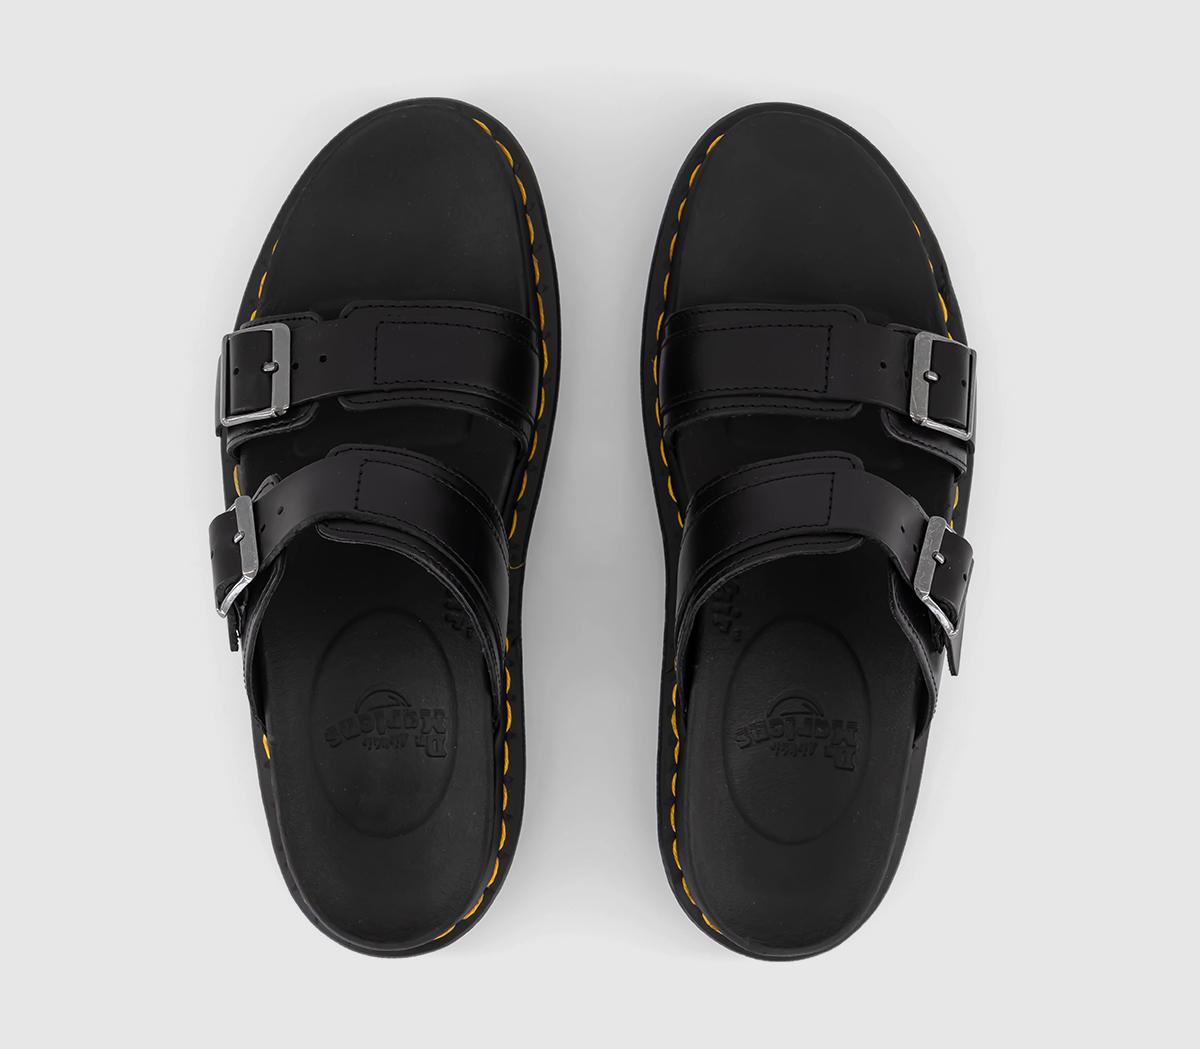 Dr. Martens Myles Sandals Black - Men’s Sandals